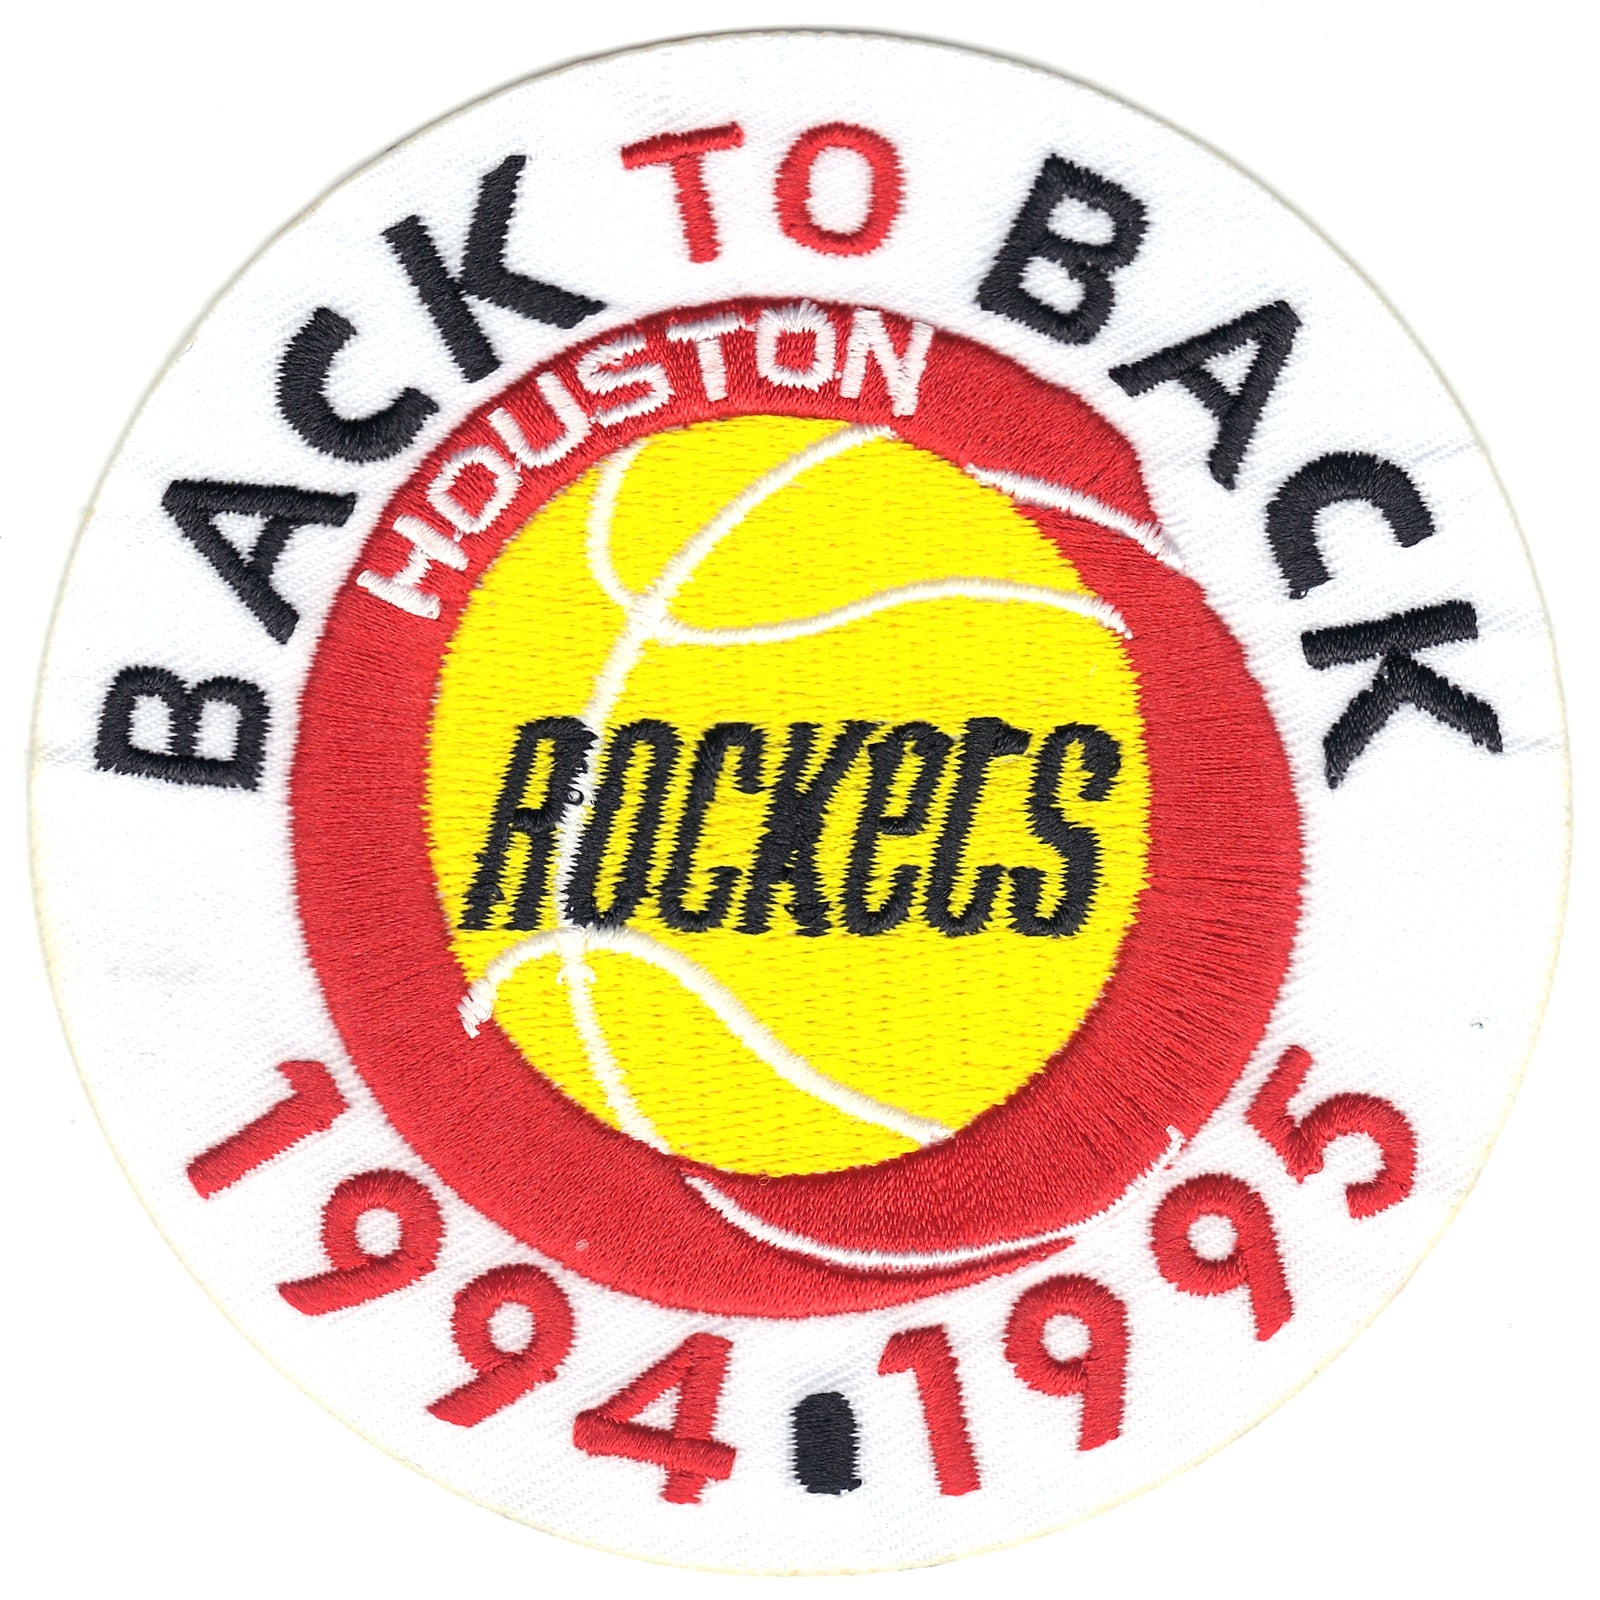 houston rockets 1995 championship